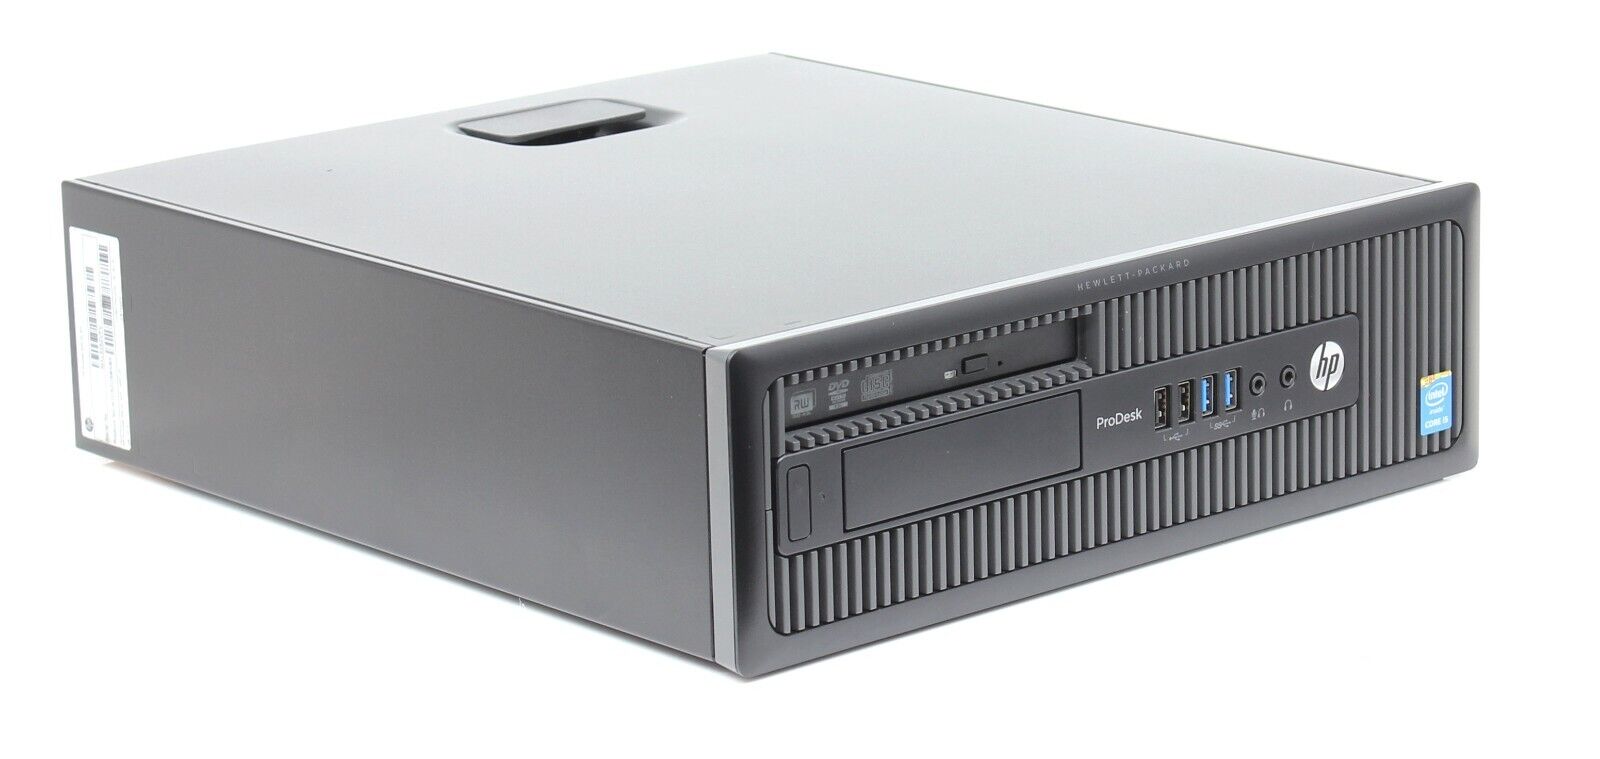 Linux Ubuntu Desktop Computer, PC: 3.20GHz, 128GB SSD, 500GB HDD, 16GB, DVD-RW